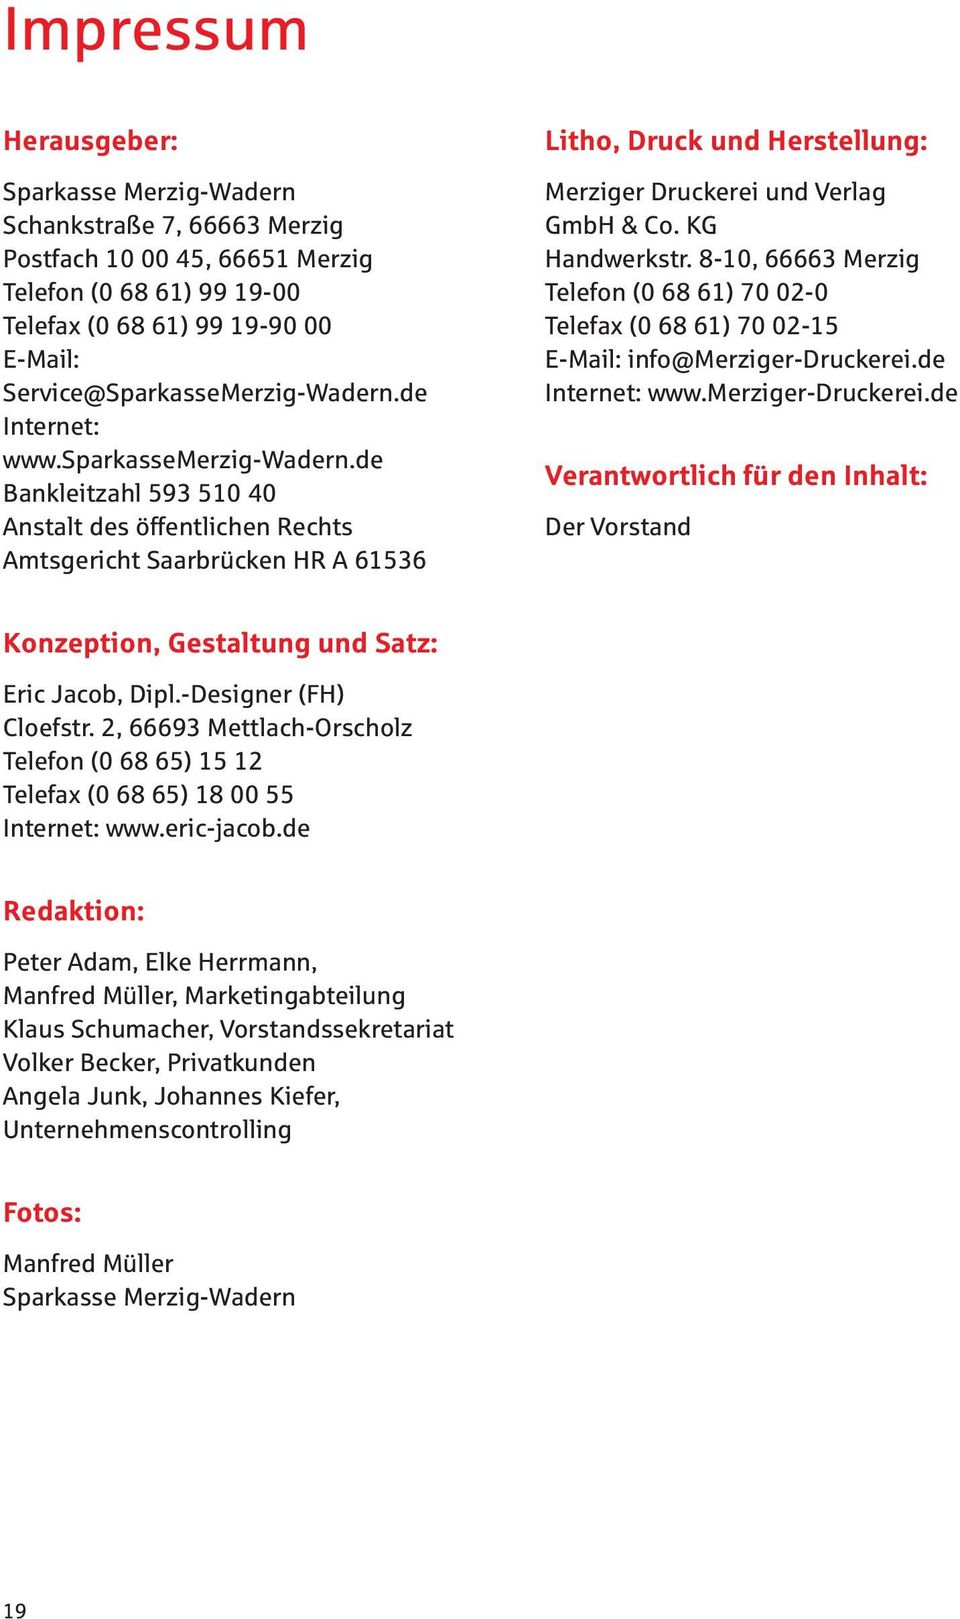 KG Handwerktr. 8-10, 66663 Merzig Telefon (0 68 61) 70 02-0 Telefax (0 68 61) 70 02-15 E-Mail: info@merziger-druckerei.